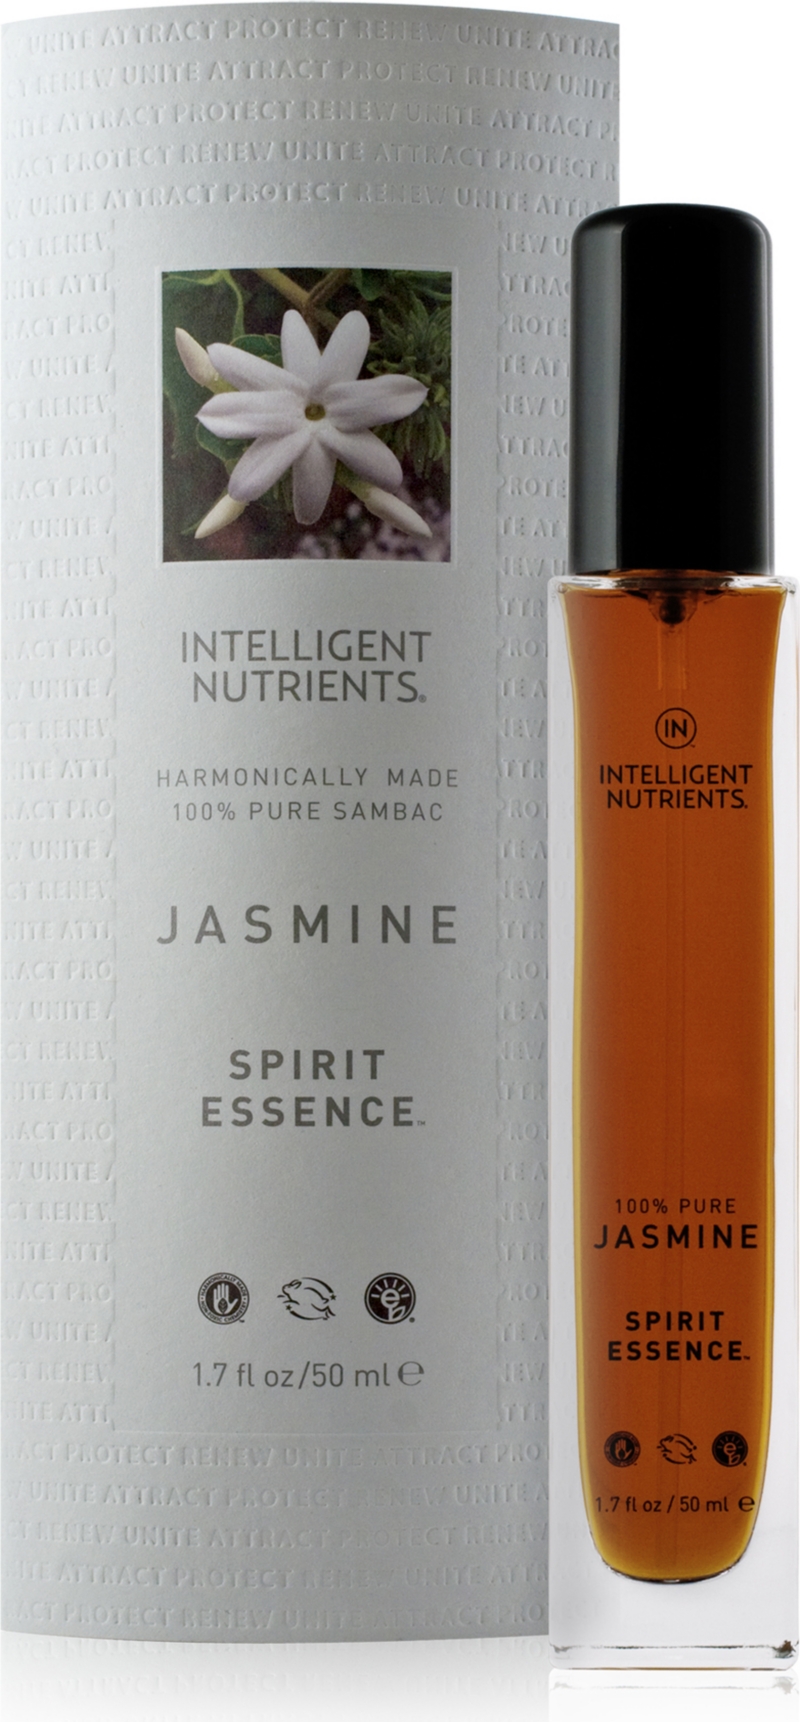 Jasmine spirit essence   INTELLIGENT NUTRIENTS   Hydrating treatments 